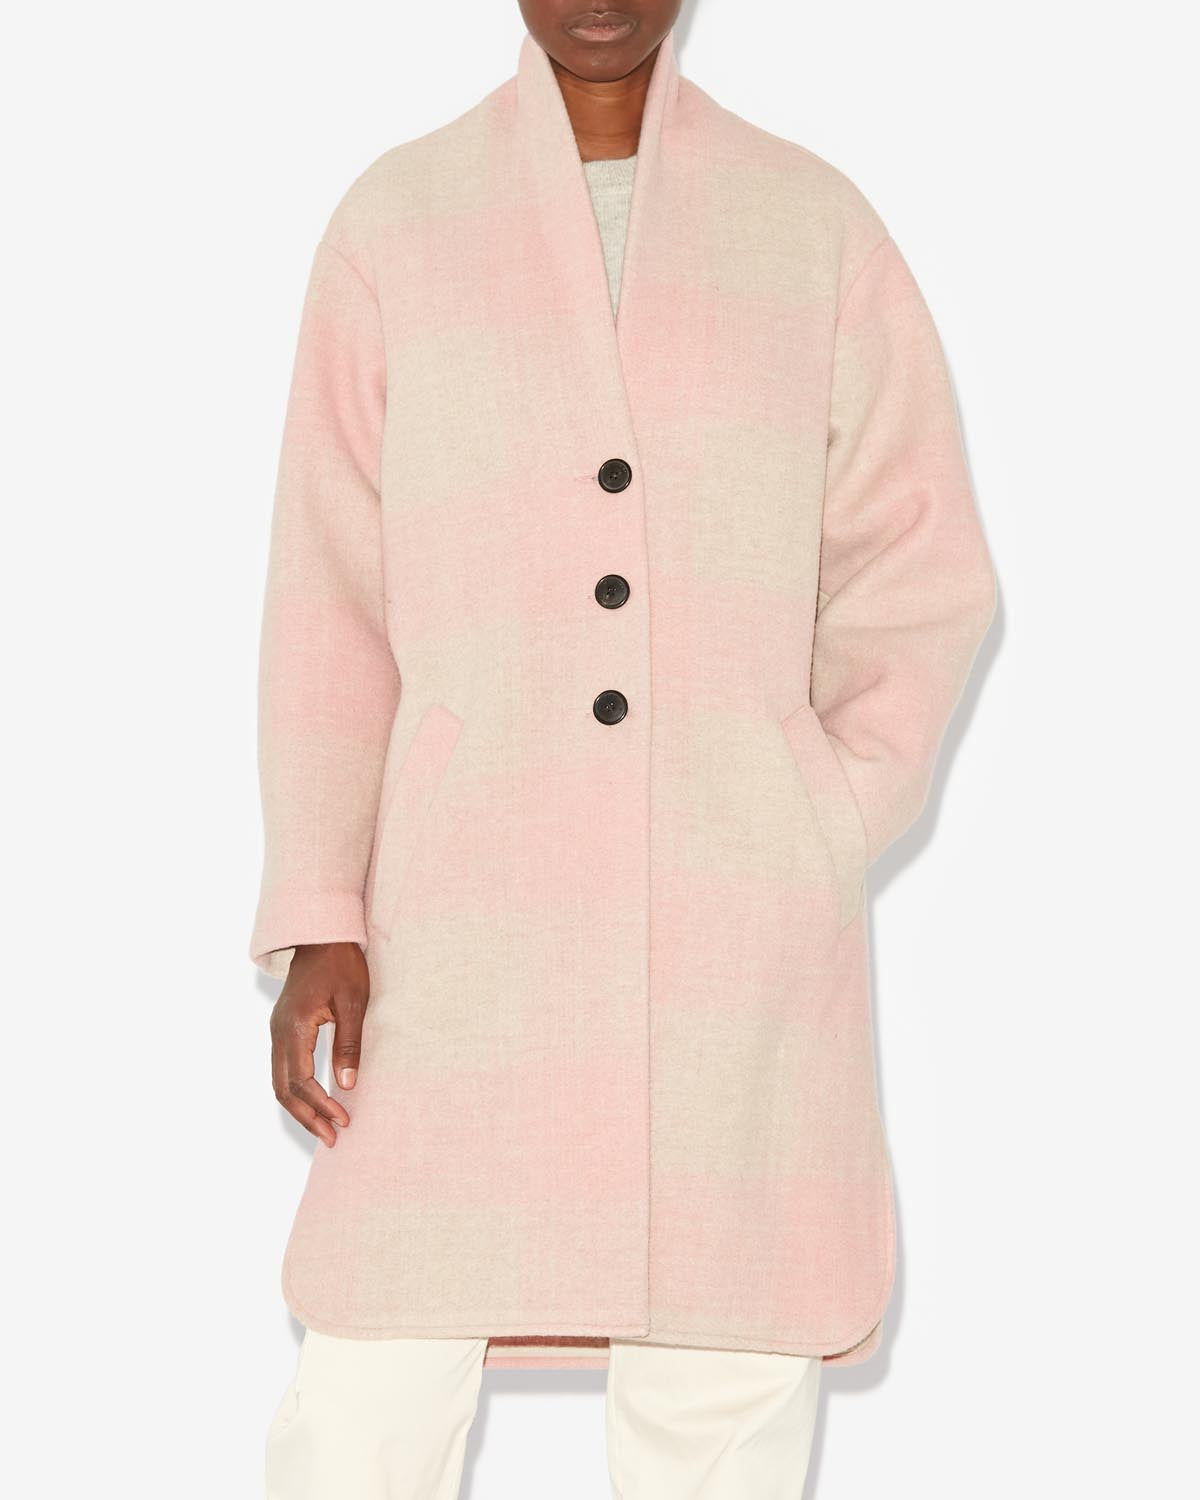 Gabriel cappotto Woman Light pink 5